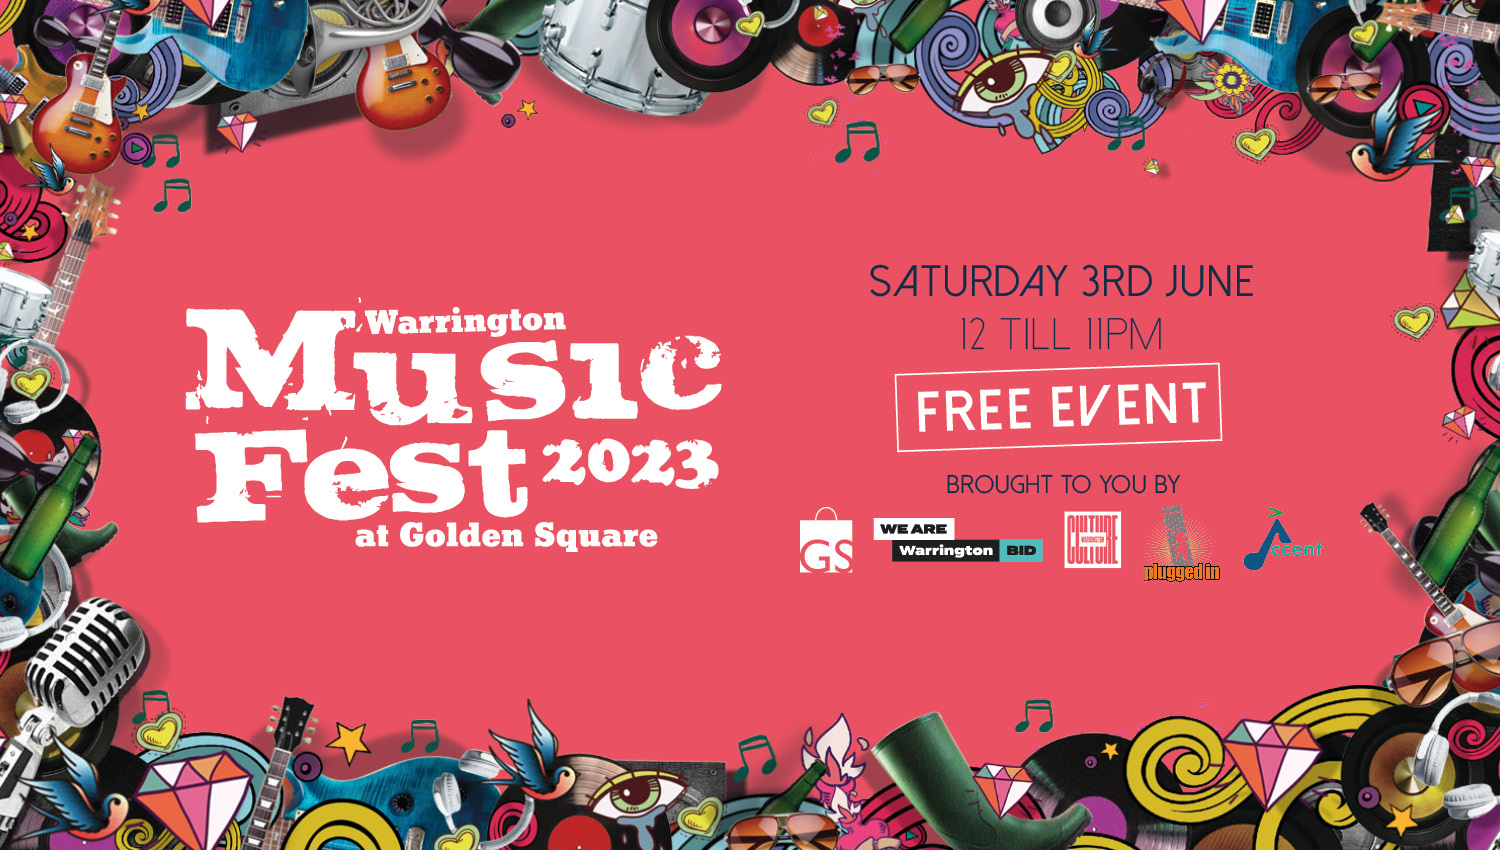 Warrington Music Festival is back - Saturday 3rd June